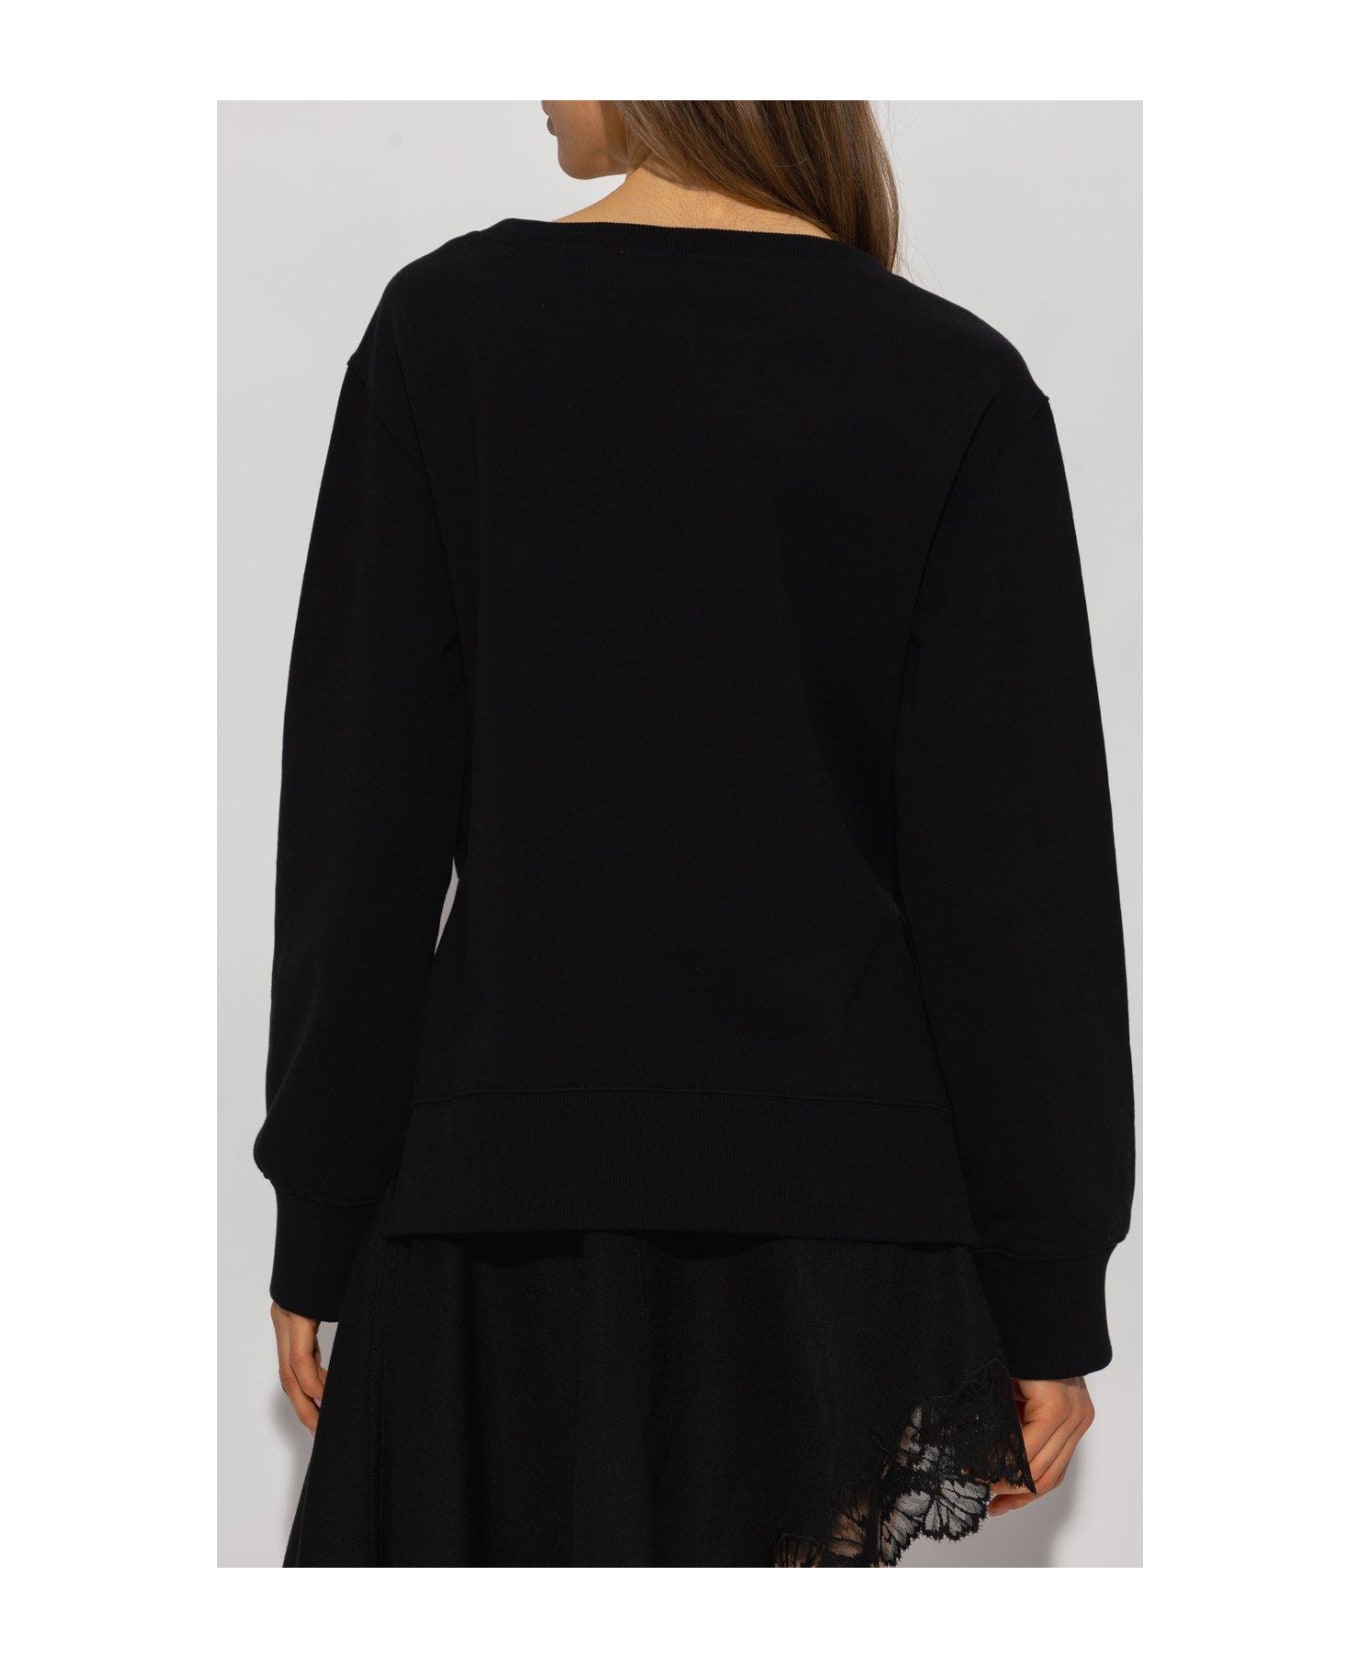 Stella McCartney Appliqued Sweatshirt - Black